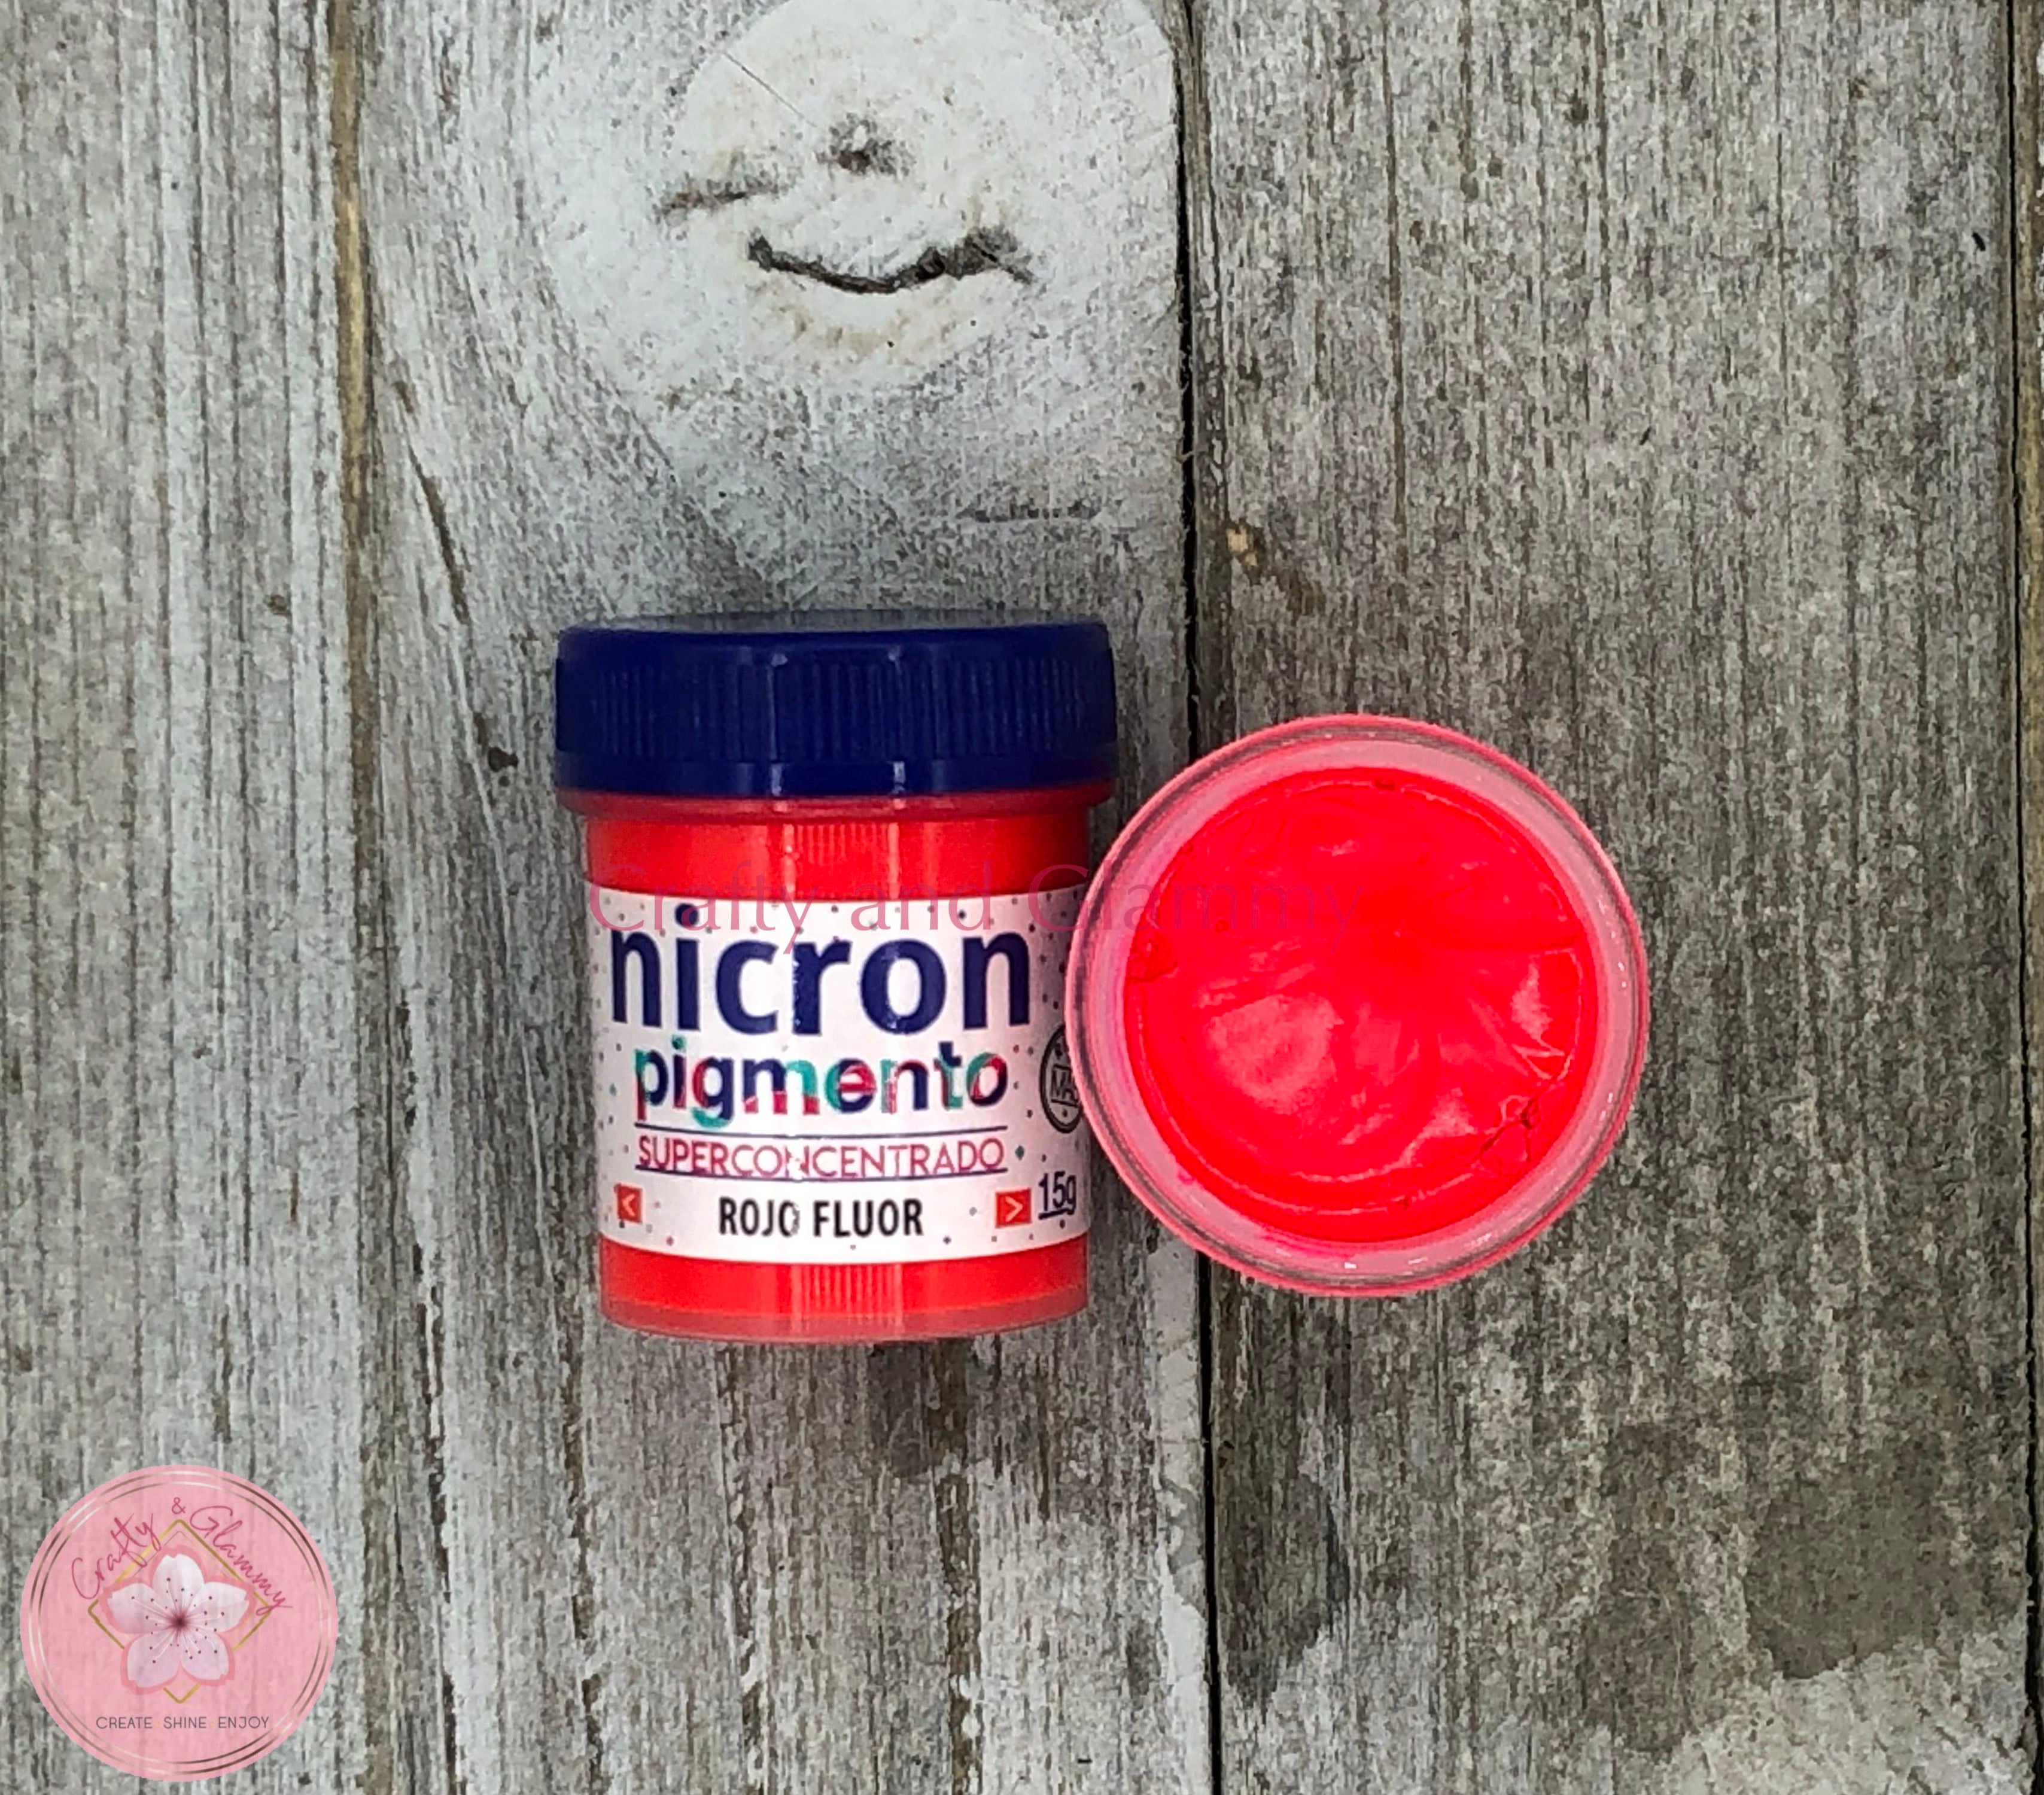 Nicron Soft Cold Porcelain Clay – Crafty & Glammy